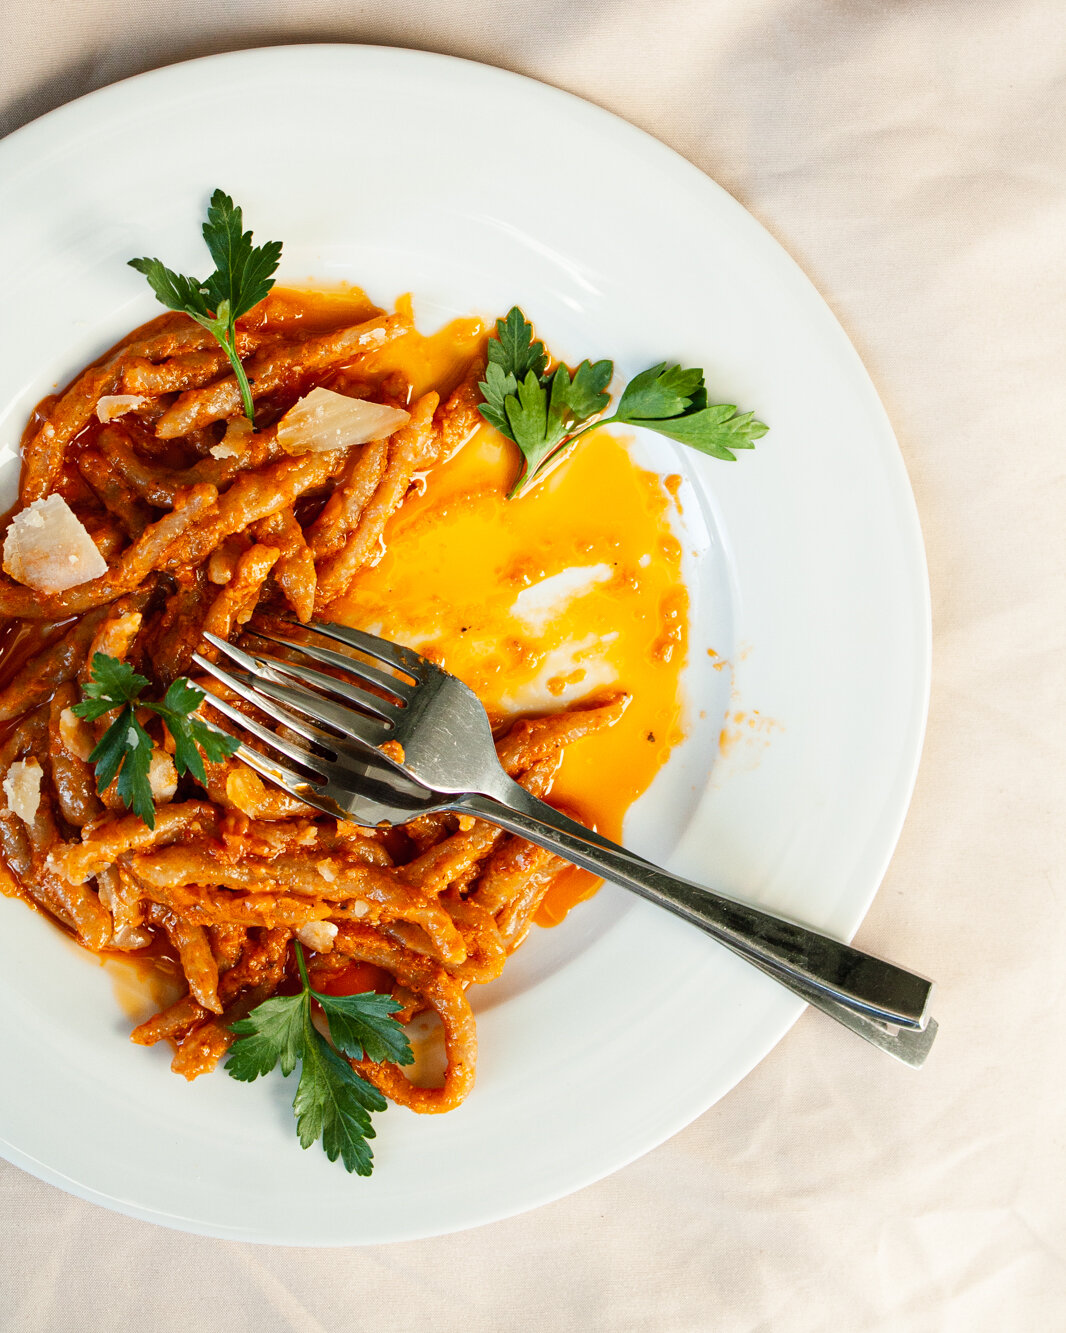 Cecamariti - sauce: tomato garlic olive oil confit, parmesan, parsley